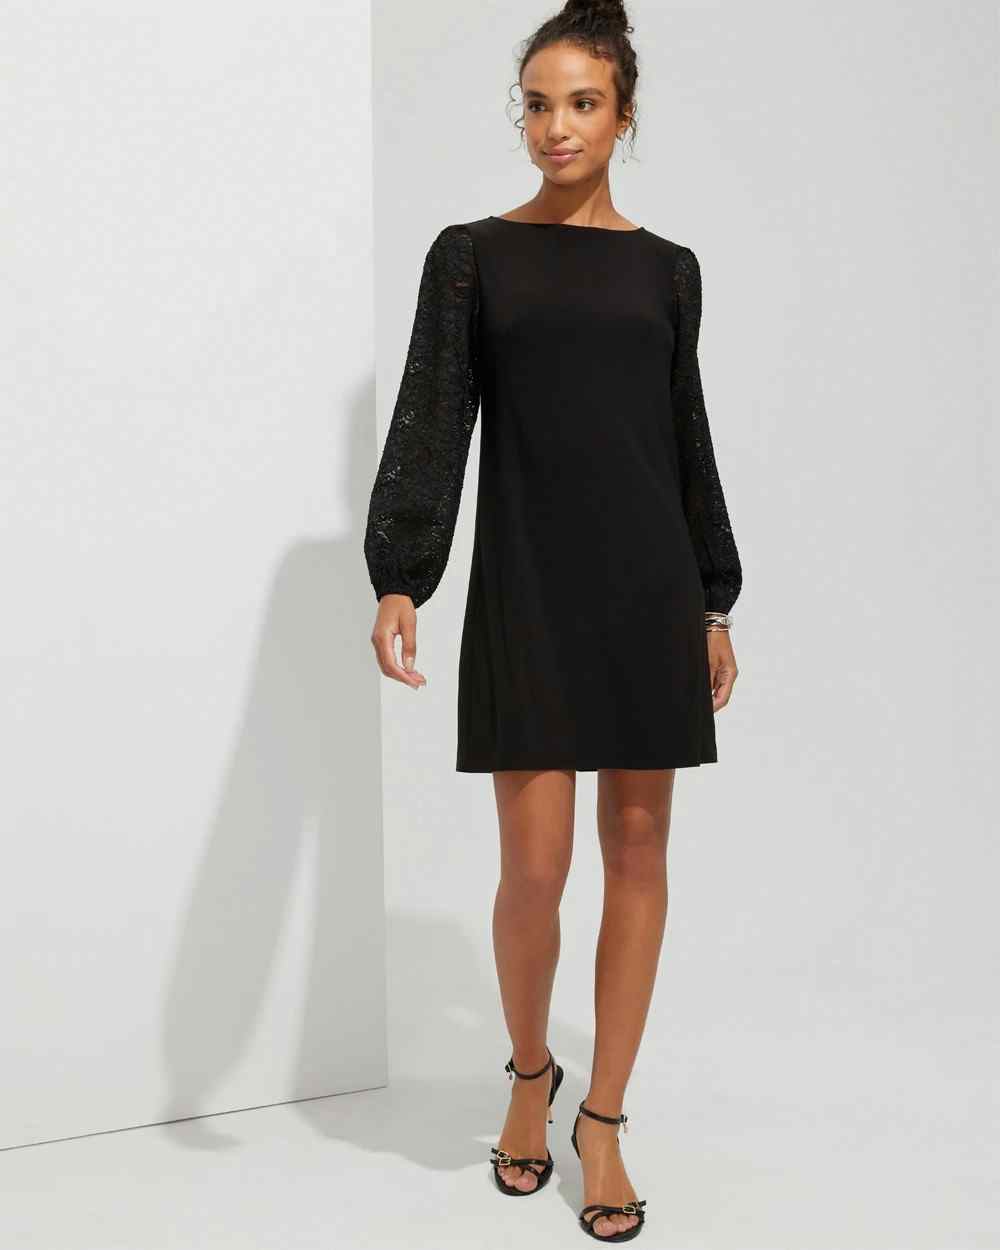 Outlet WHBM Lace Sleeve Mini Dress | White House Black Market